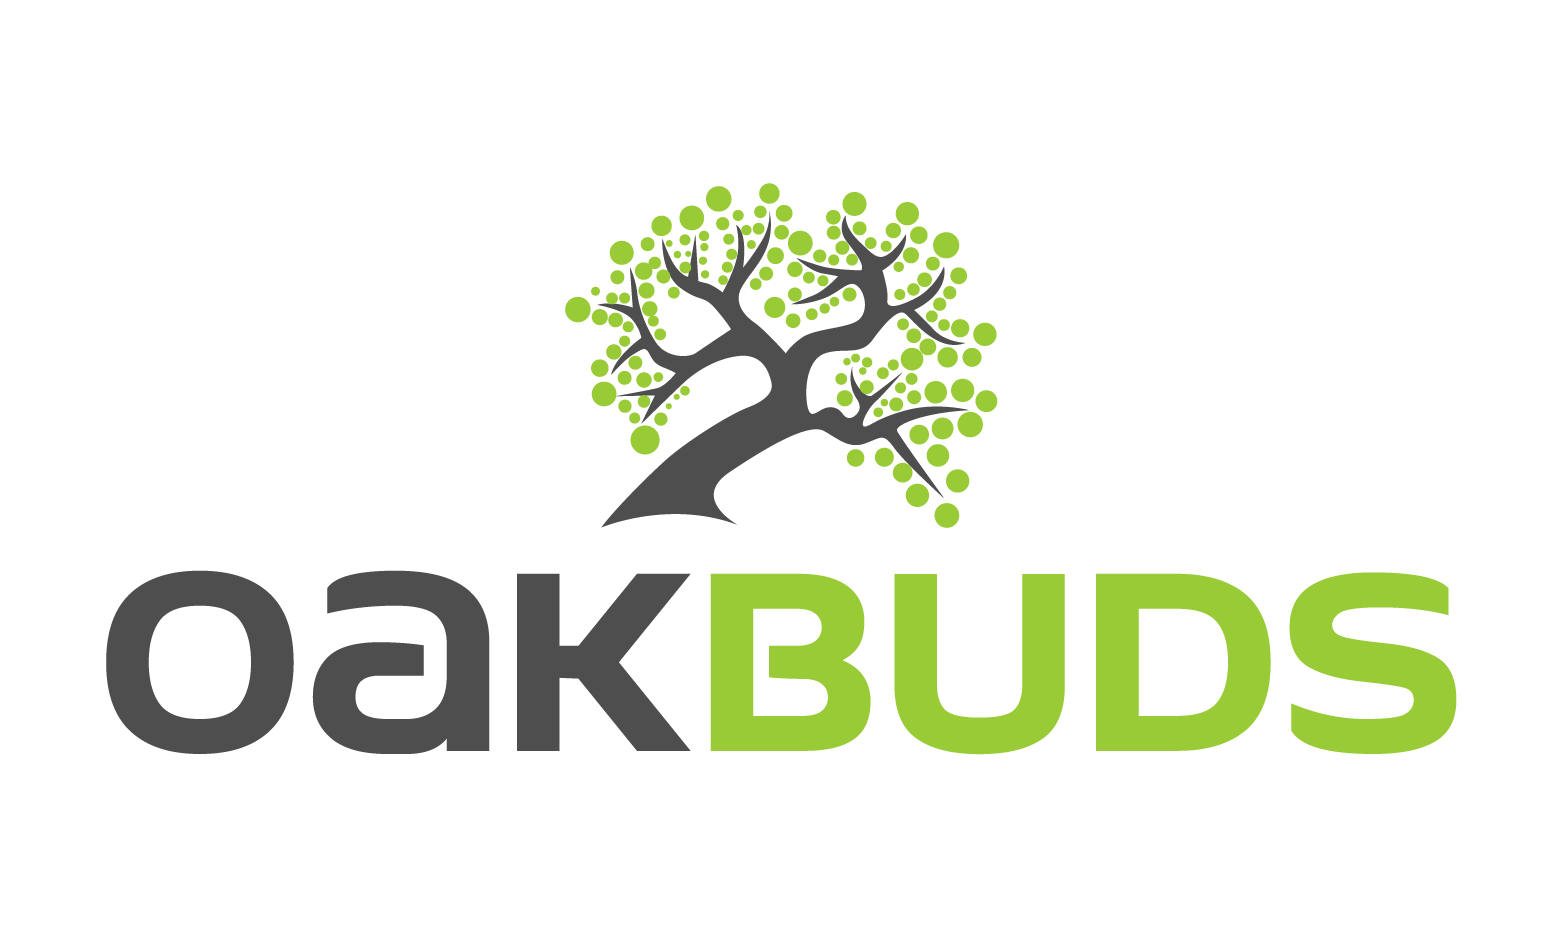 OakBuds.com - Creative brandable domain for sale